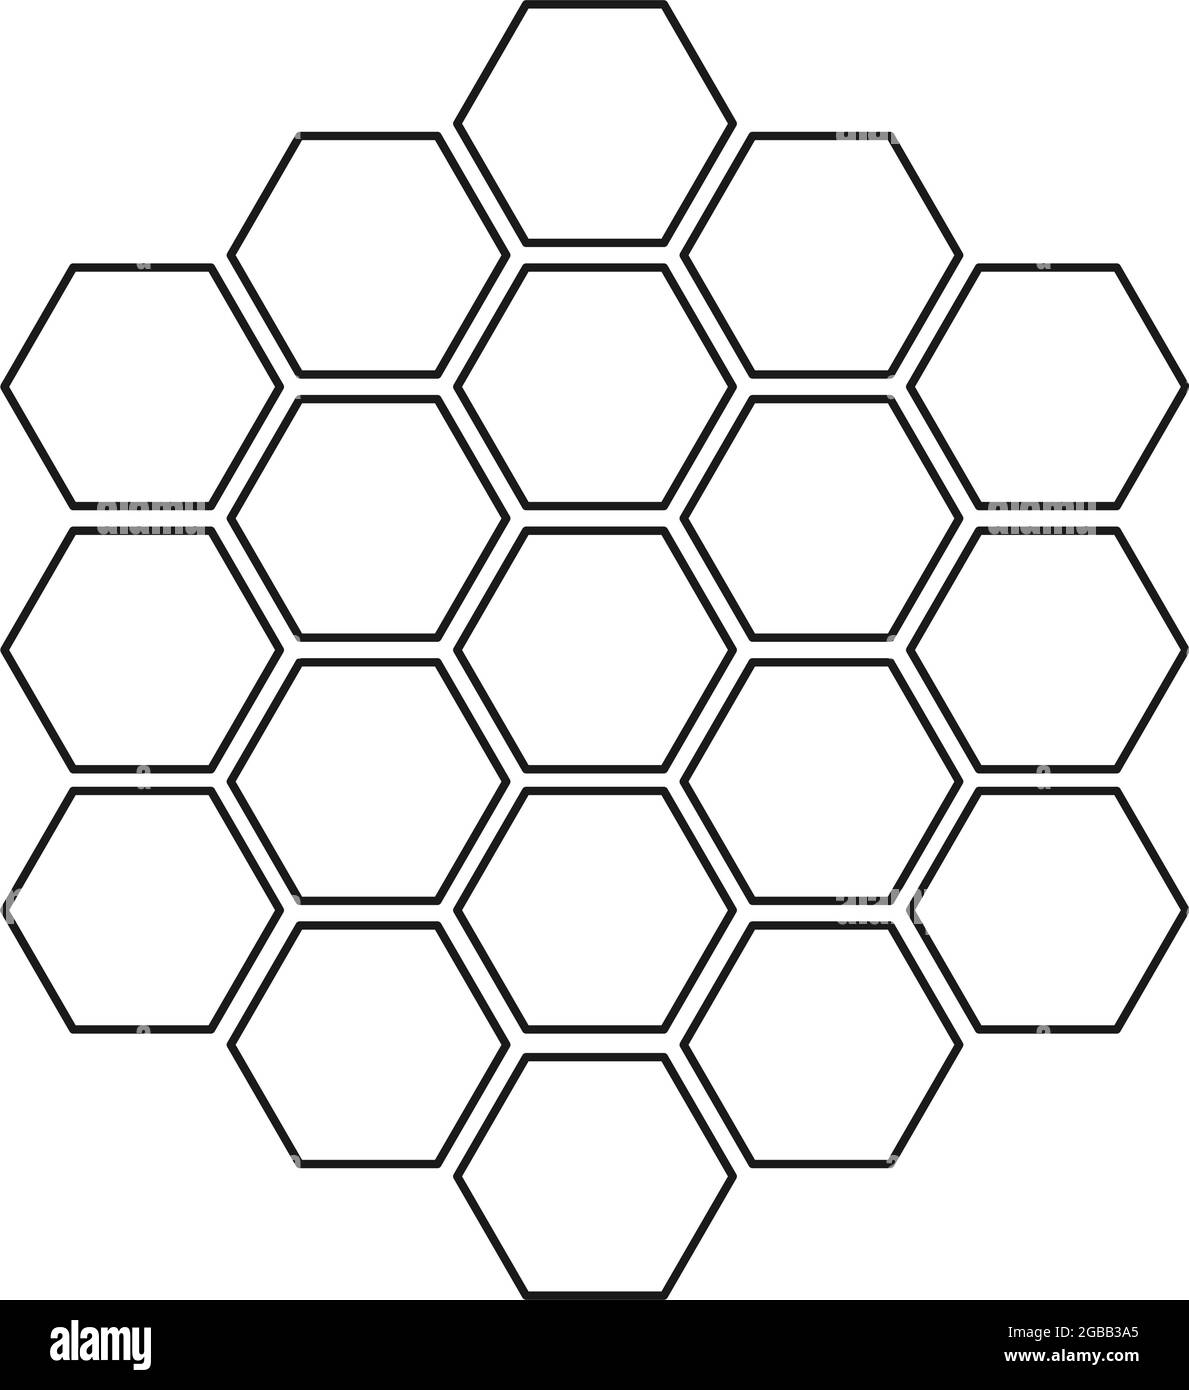 Black and white monochrome honeyb grid background hexagon pattern vector illustration template for web site banner poster leaflet stock vector image art